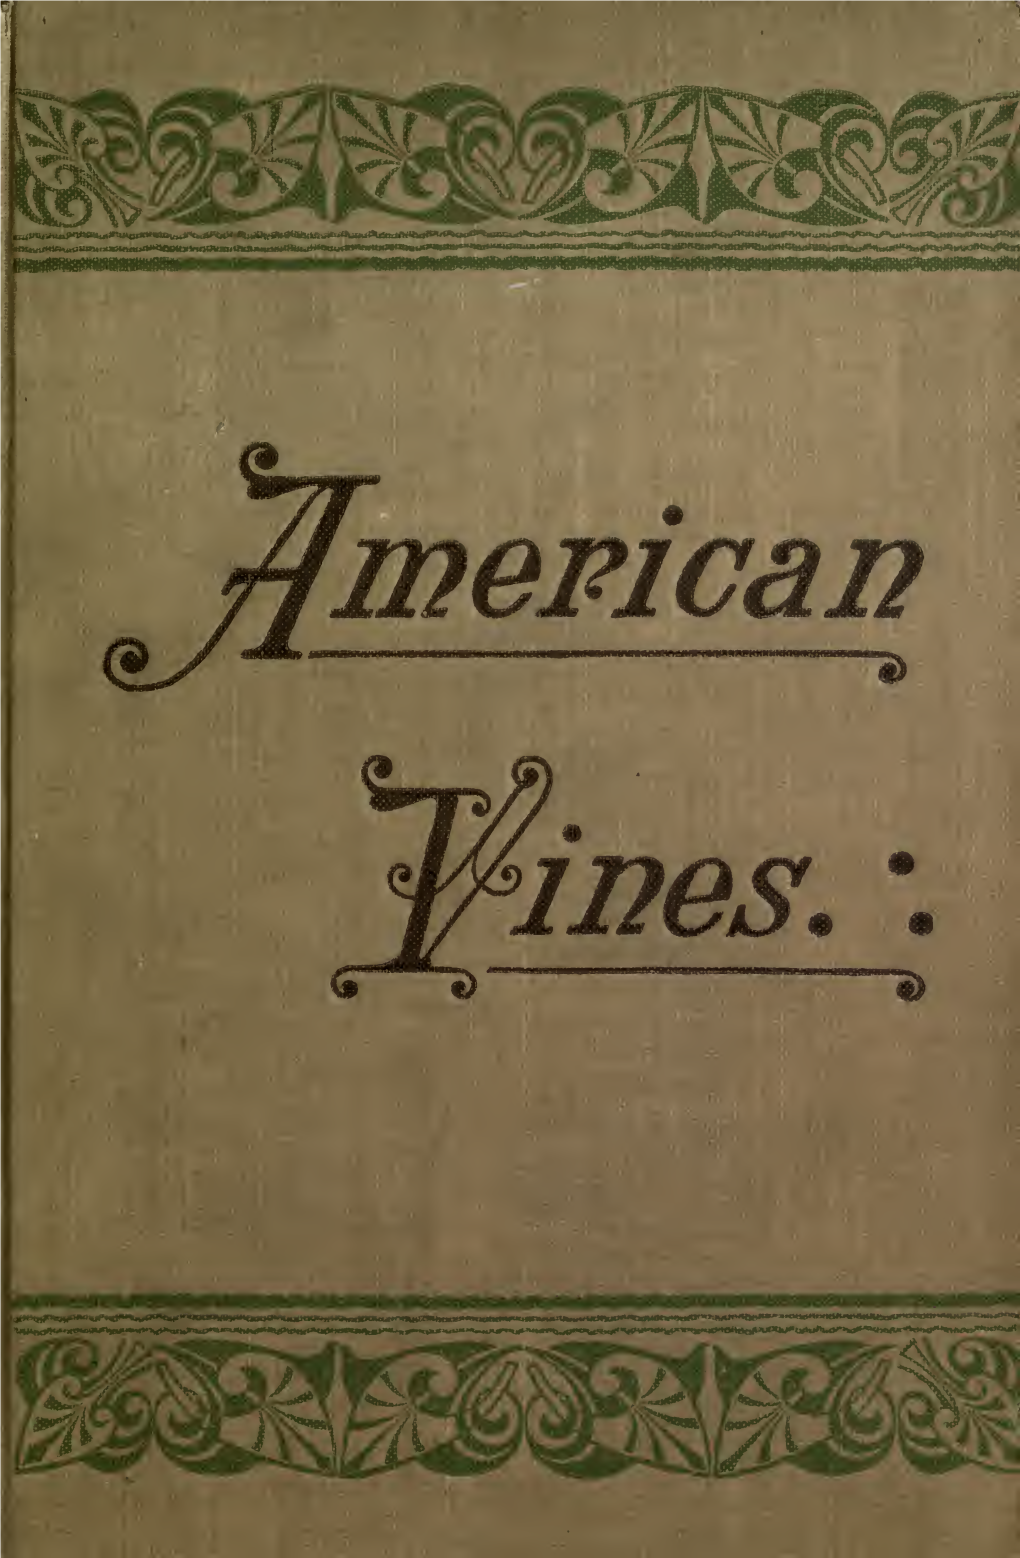 American Vines